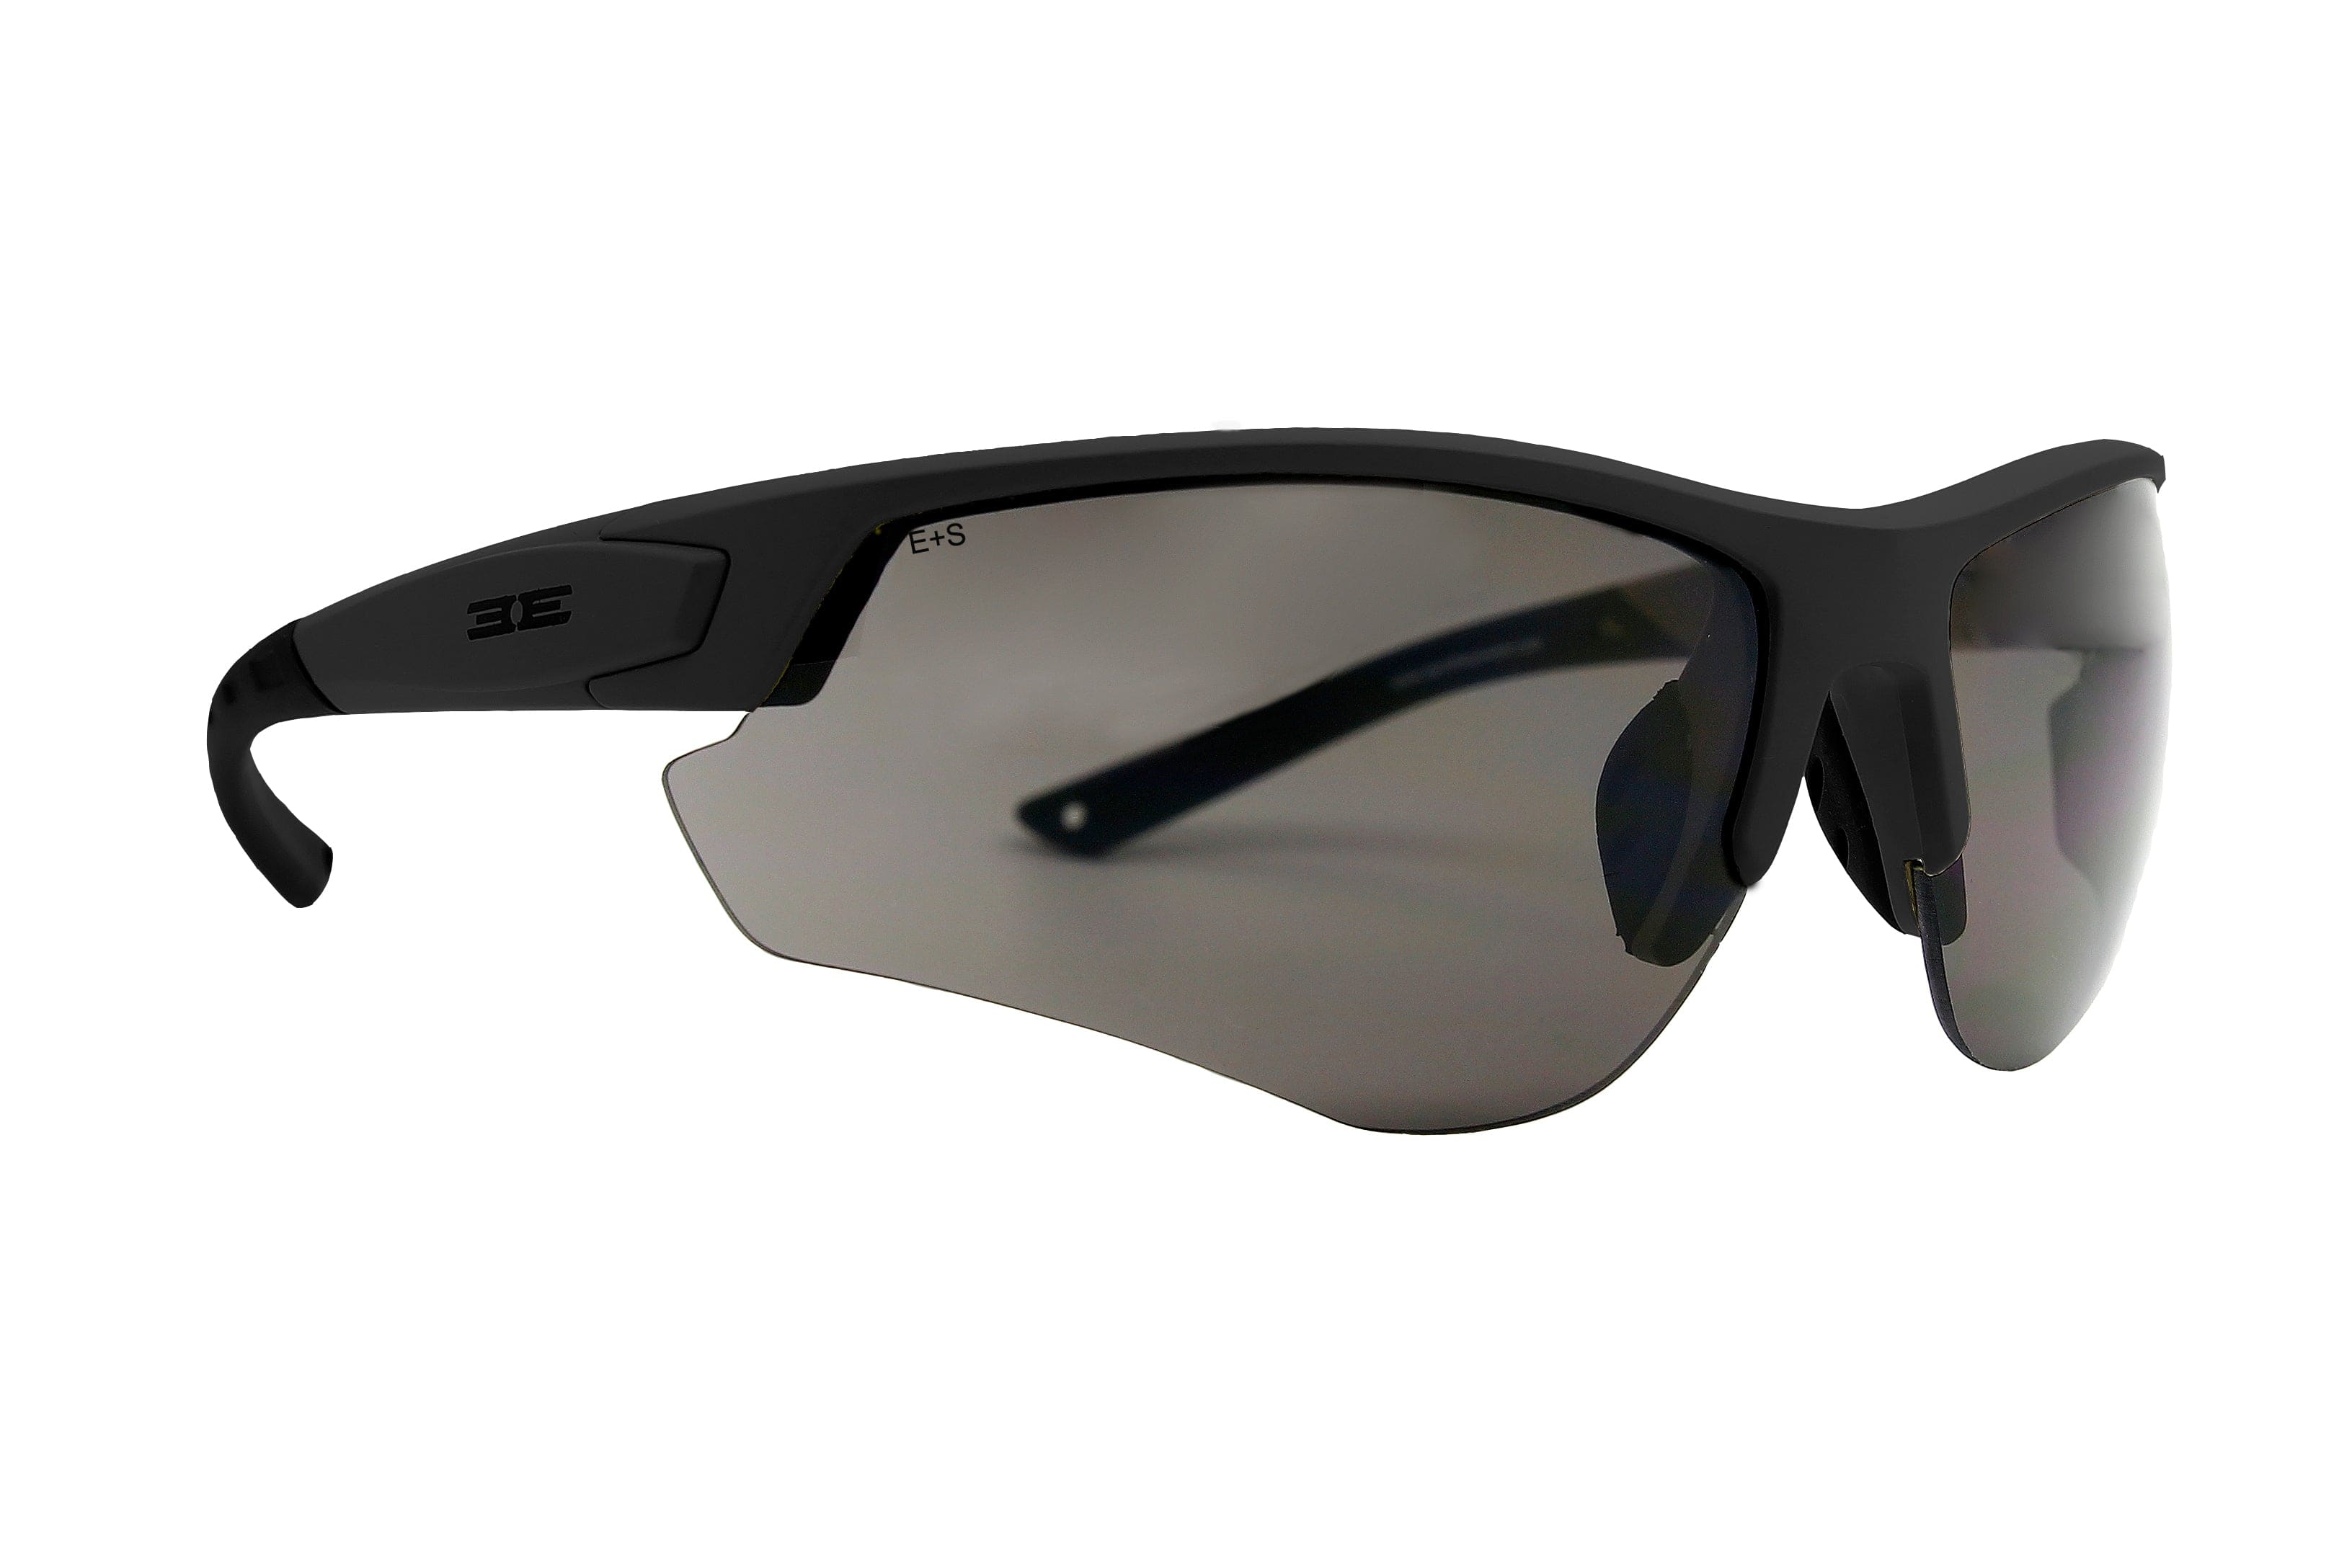 Epoch Eyewear Grunt Tactical Safety Sunglasses